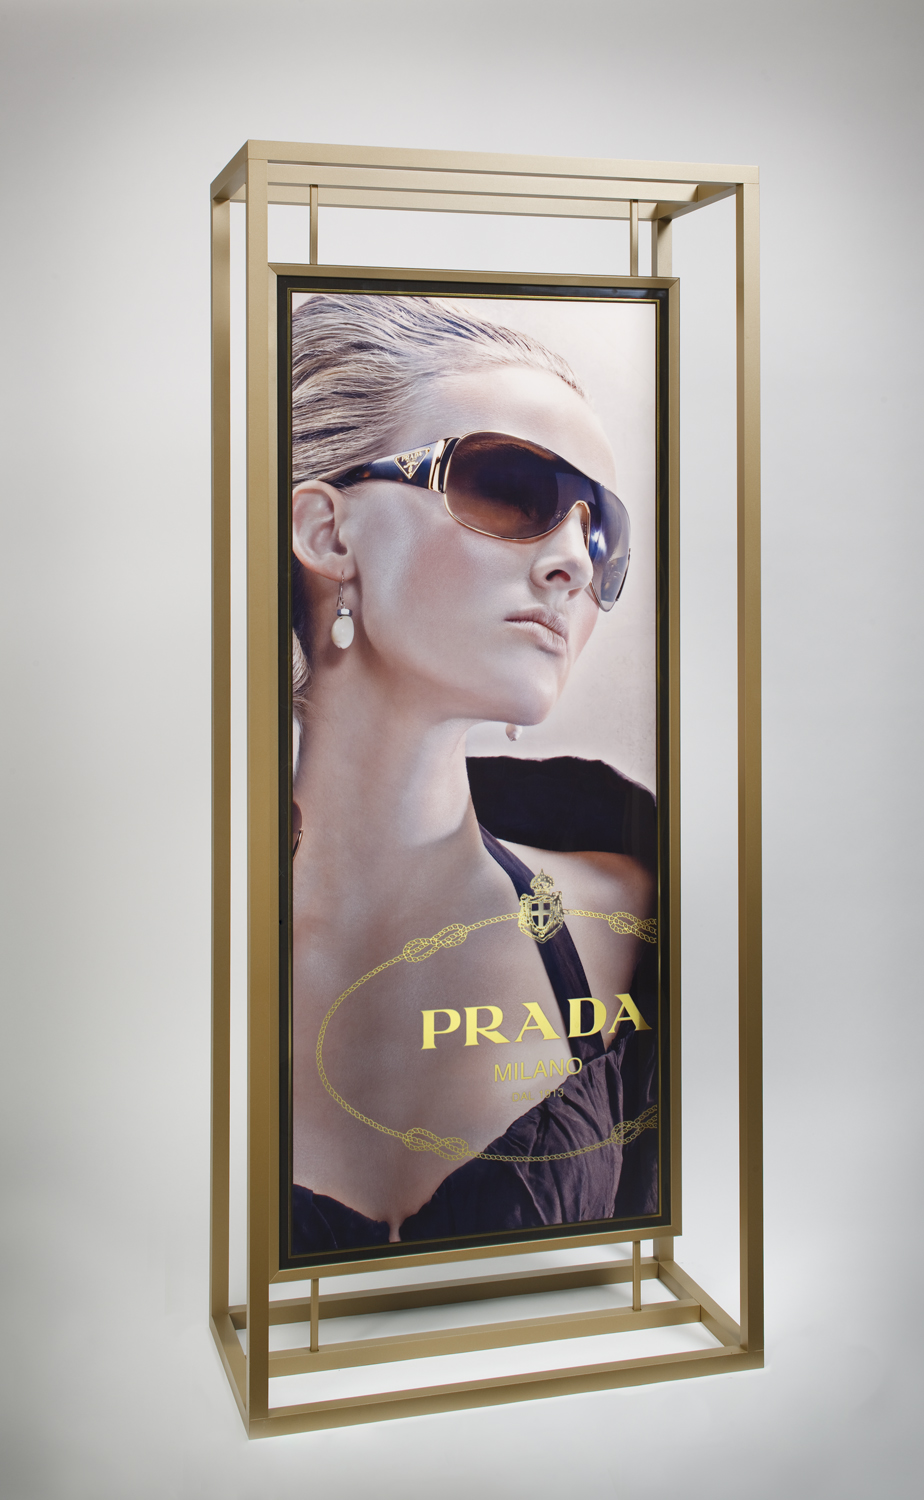 Prada Fashion Poster – Basic Outline Interiors